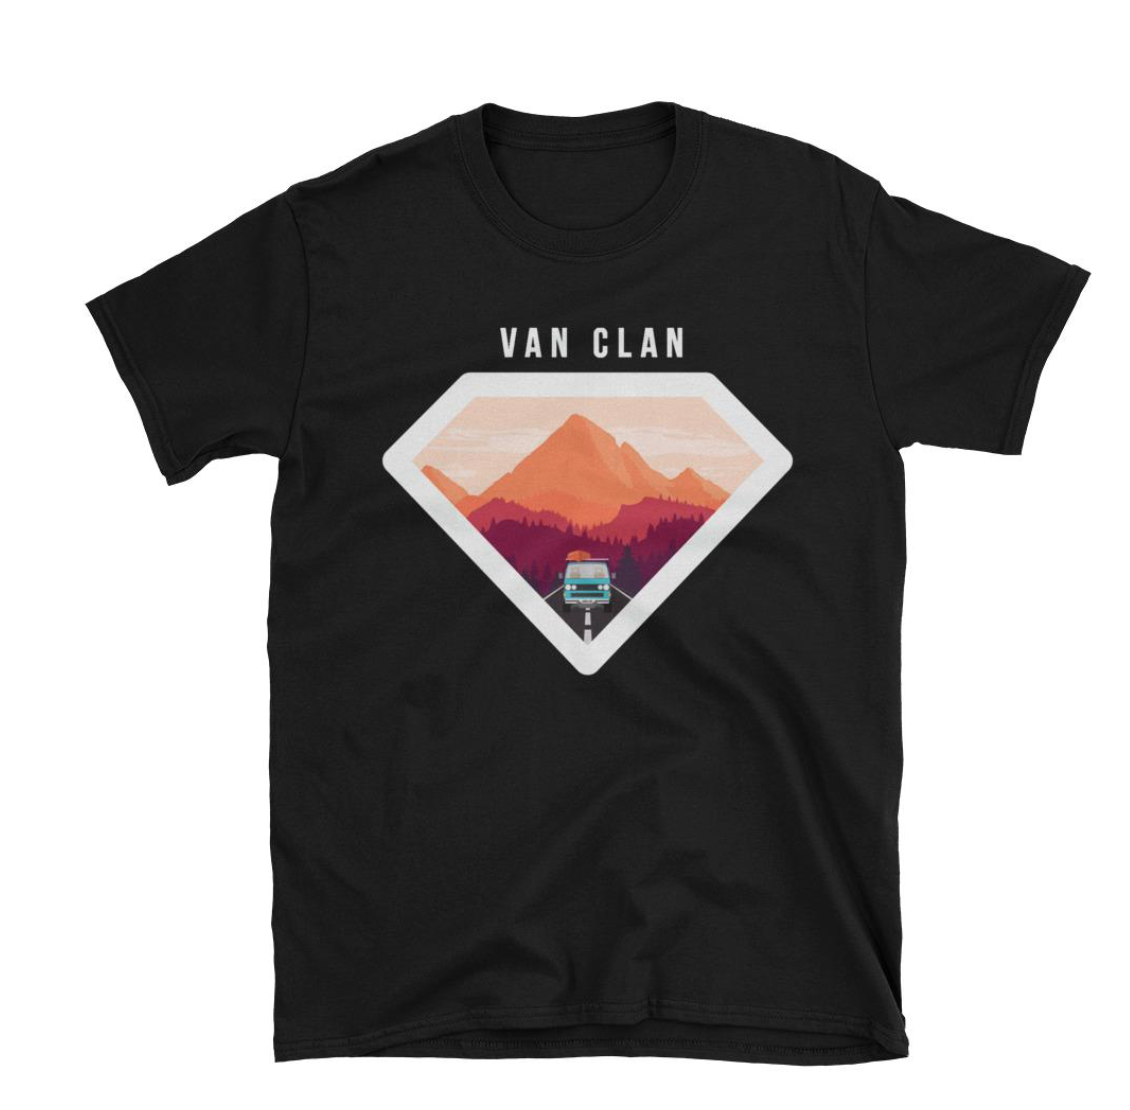 Campervan gifts - Van Clan Shirt